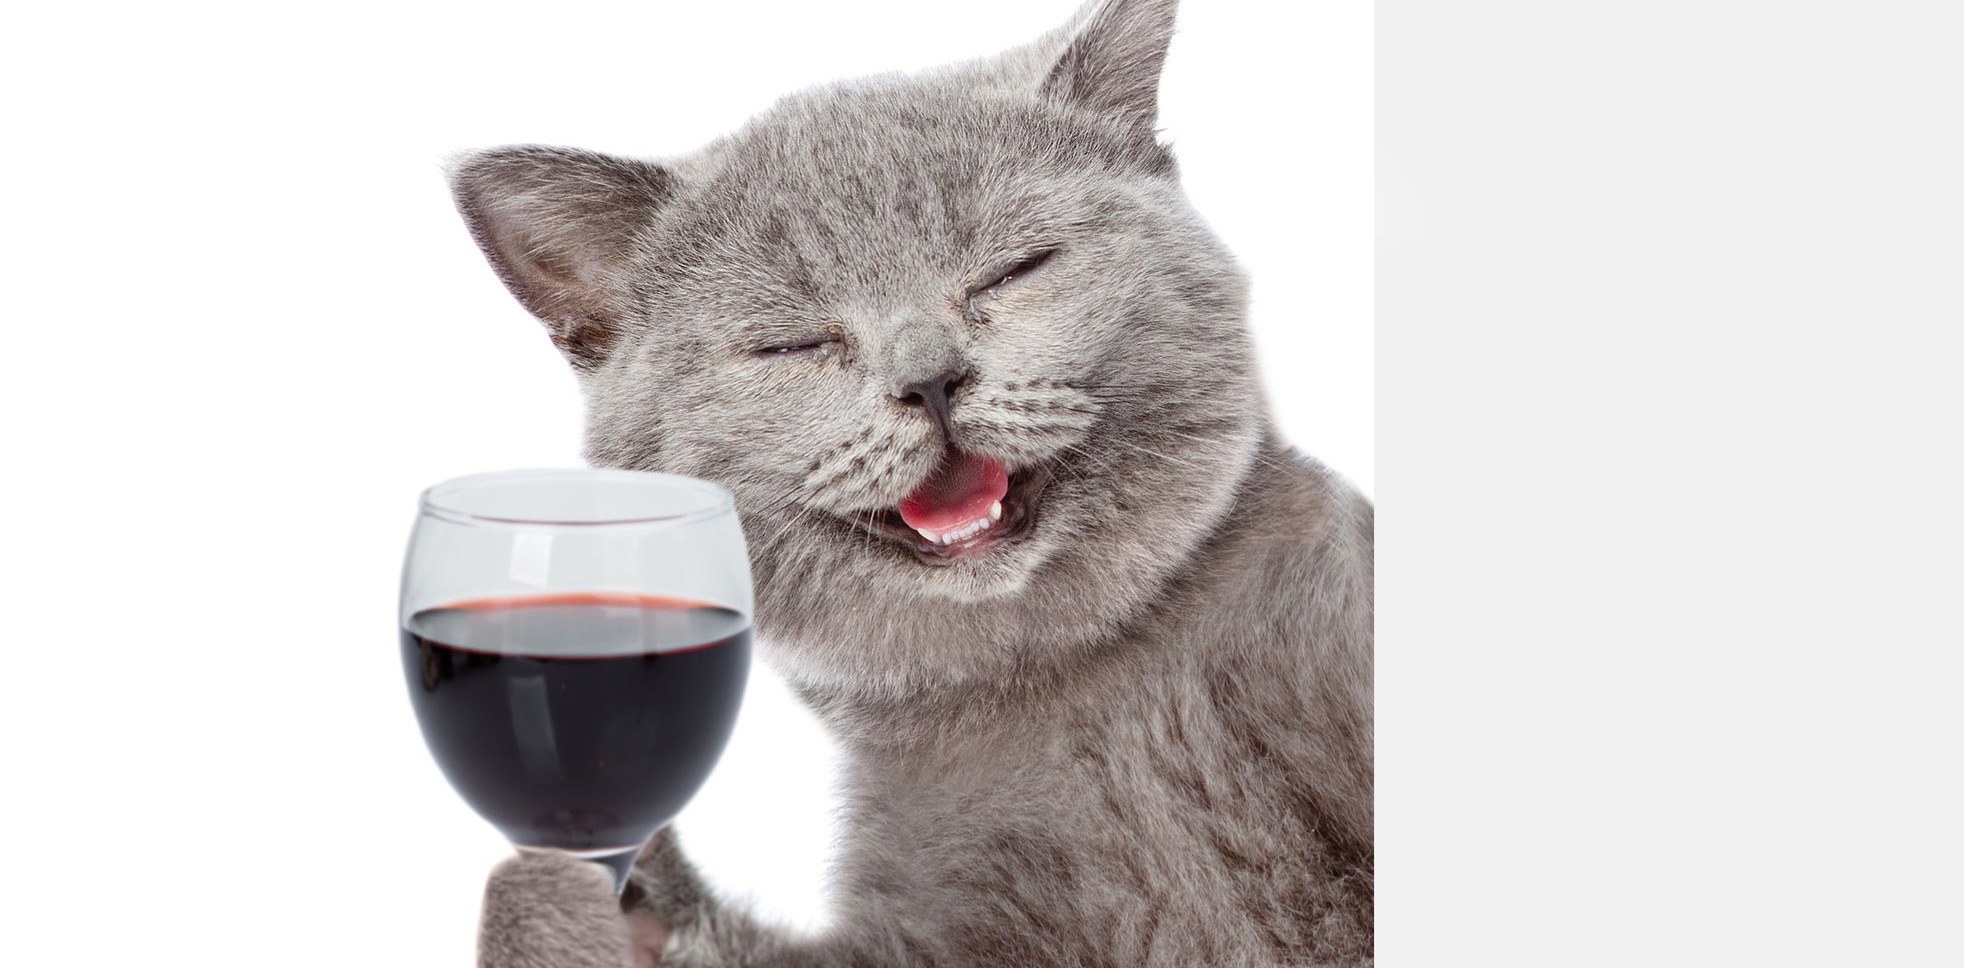 Cat raises glass of wine